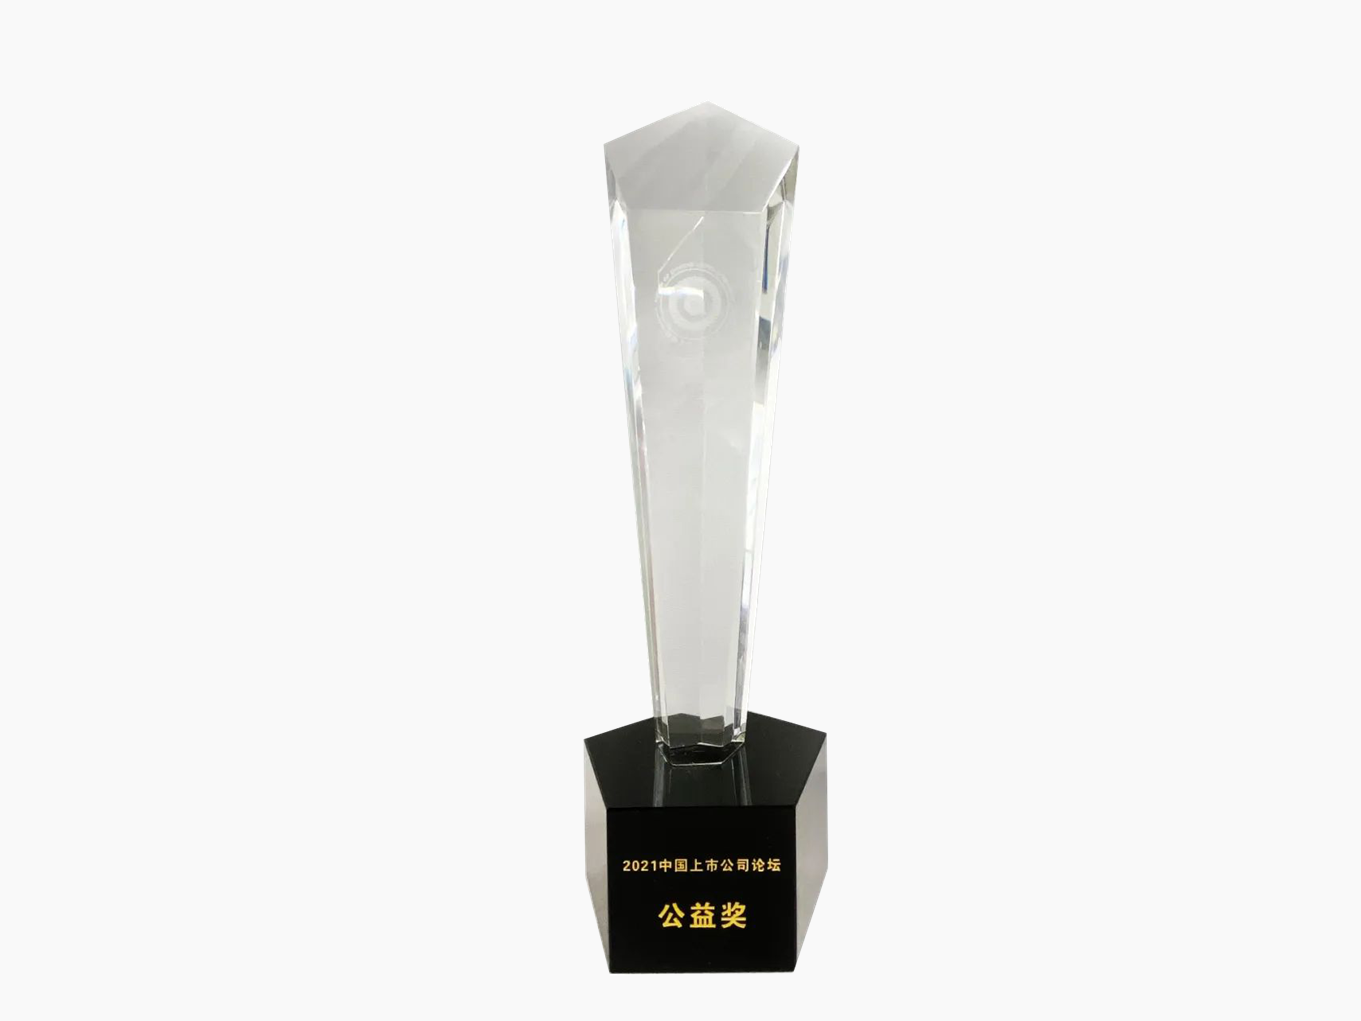 2021 China Listed Company Best Charity Award